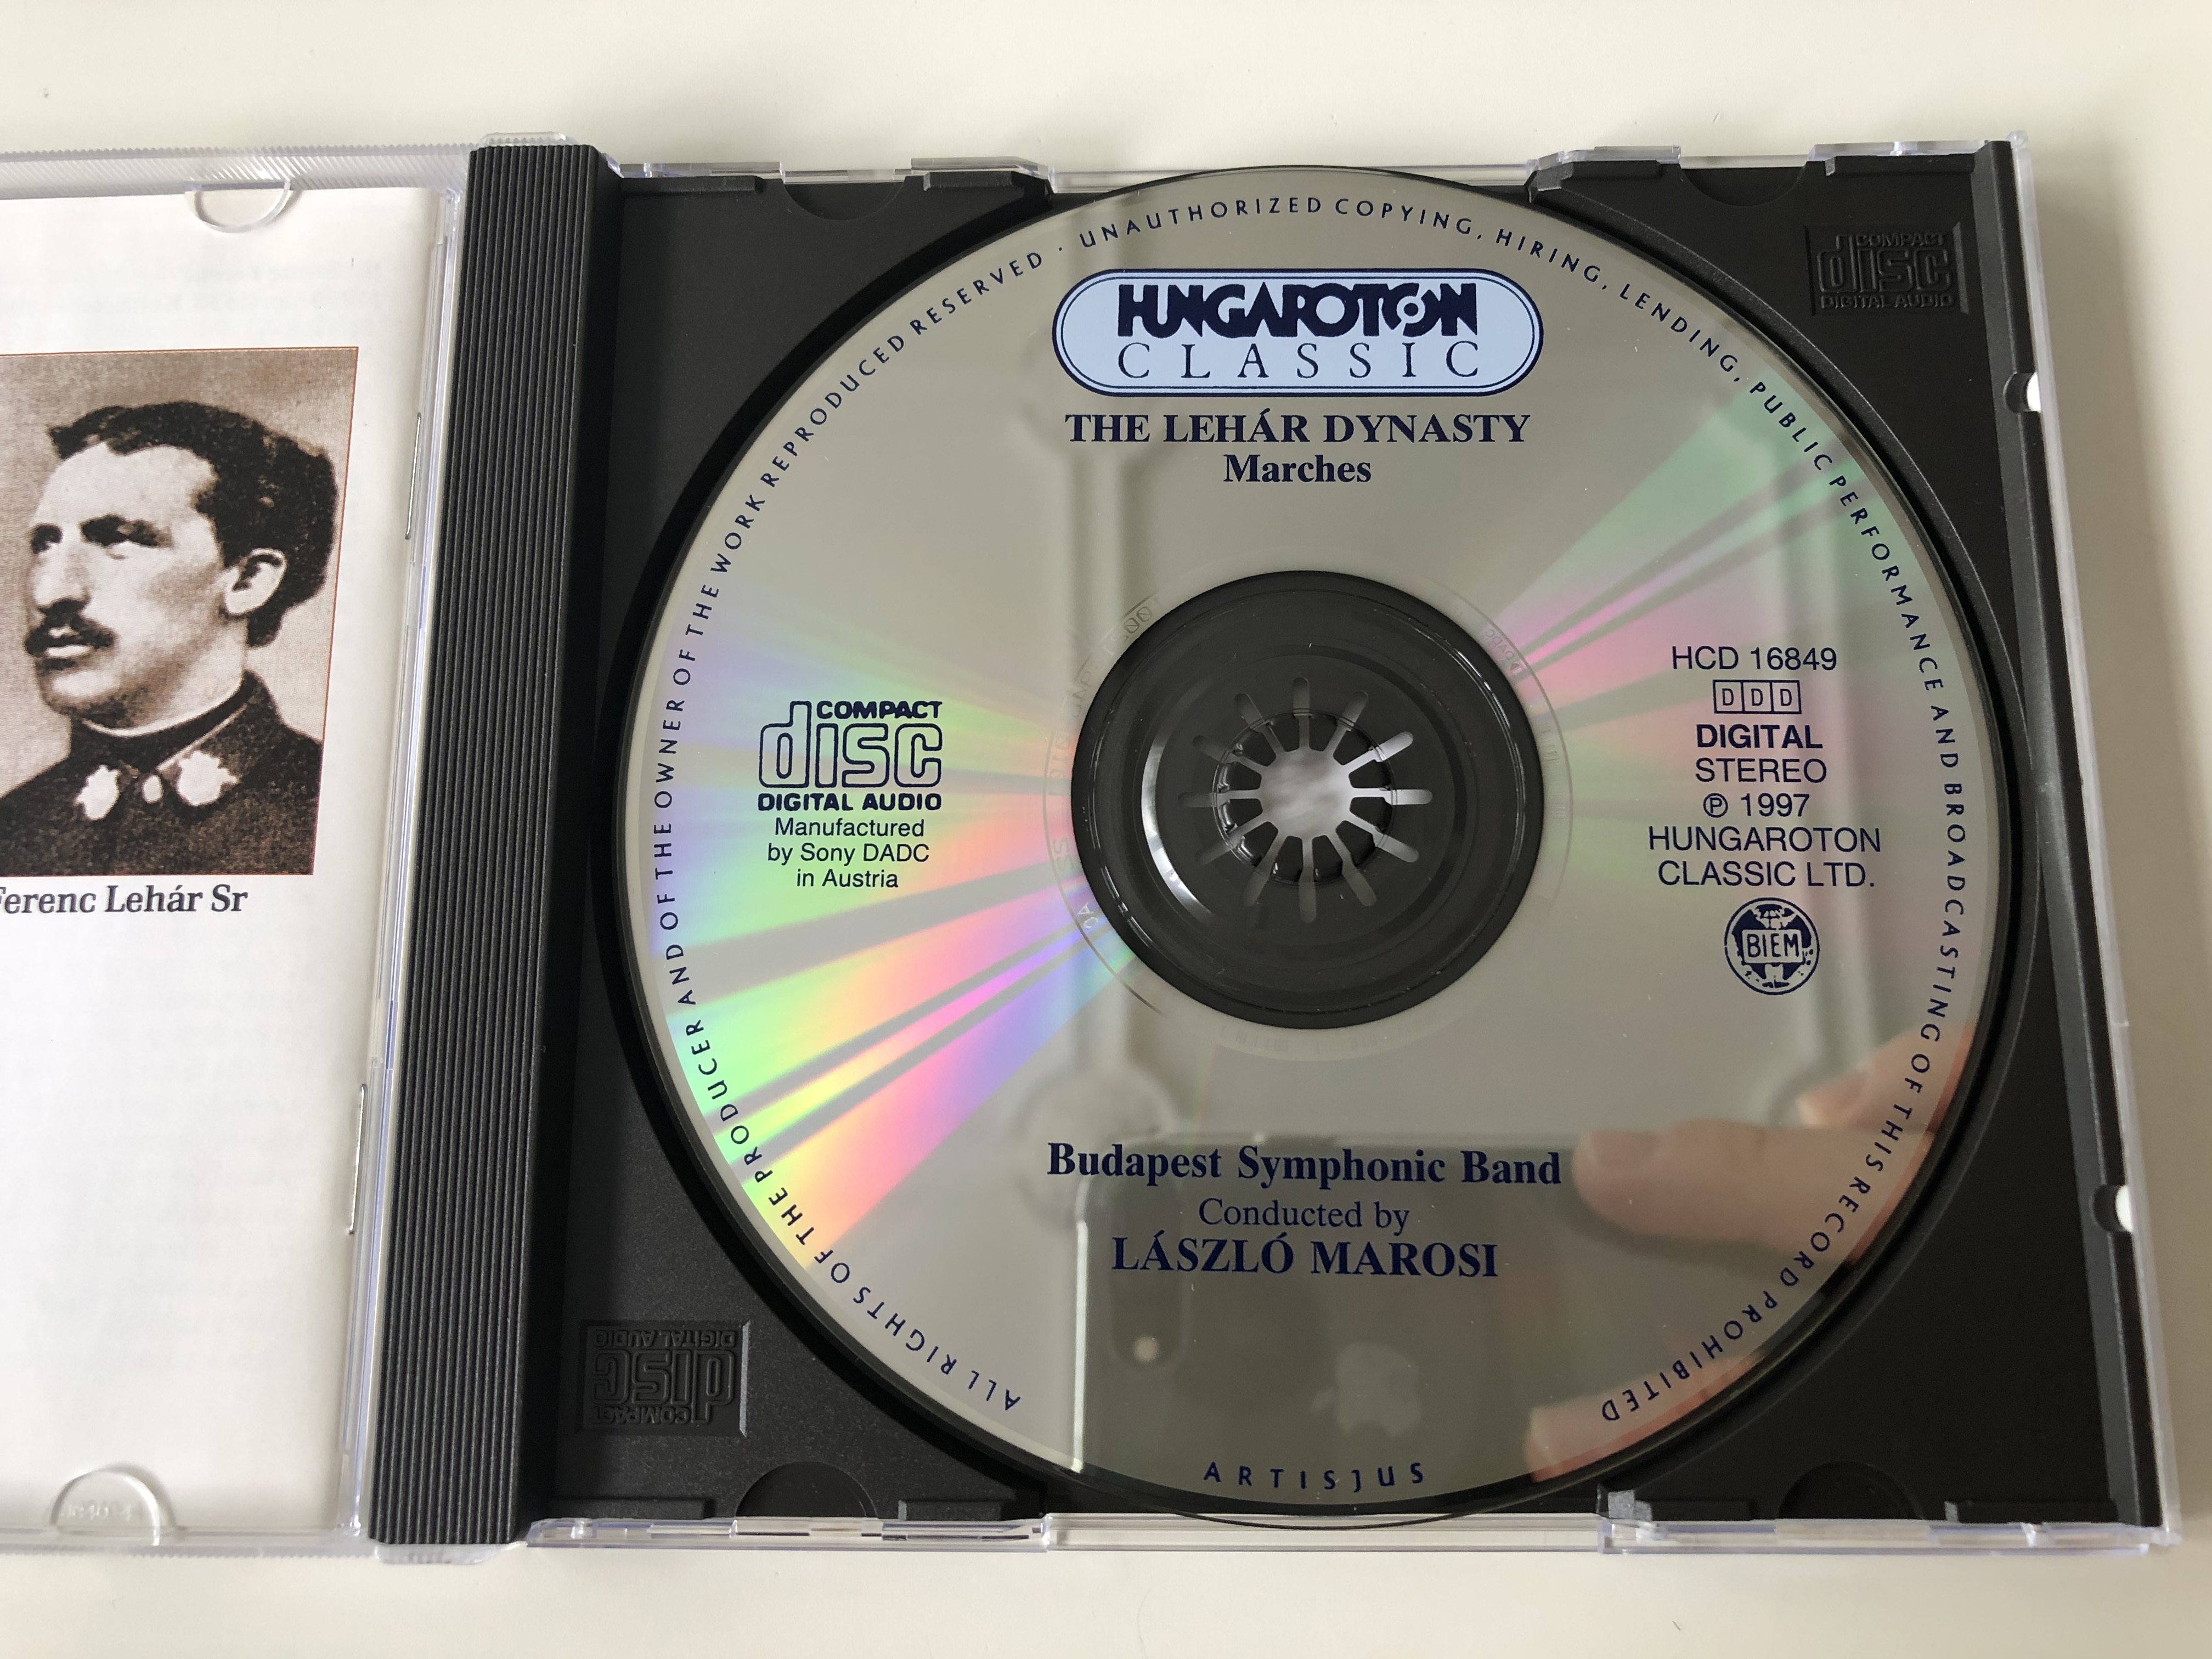 the-leh-r-dynasty-marches-budapest-symphonic-band-l-szl-marosi-hungaroton-classic-audio-cd-1997-stereo-hcd-16849-6-.jpg